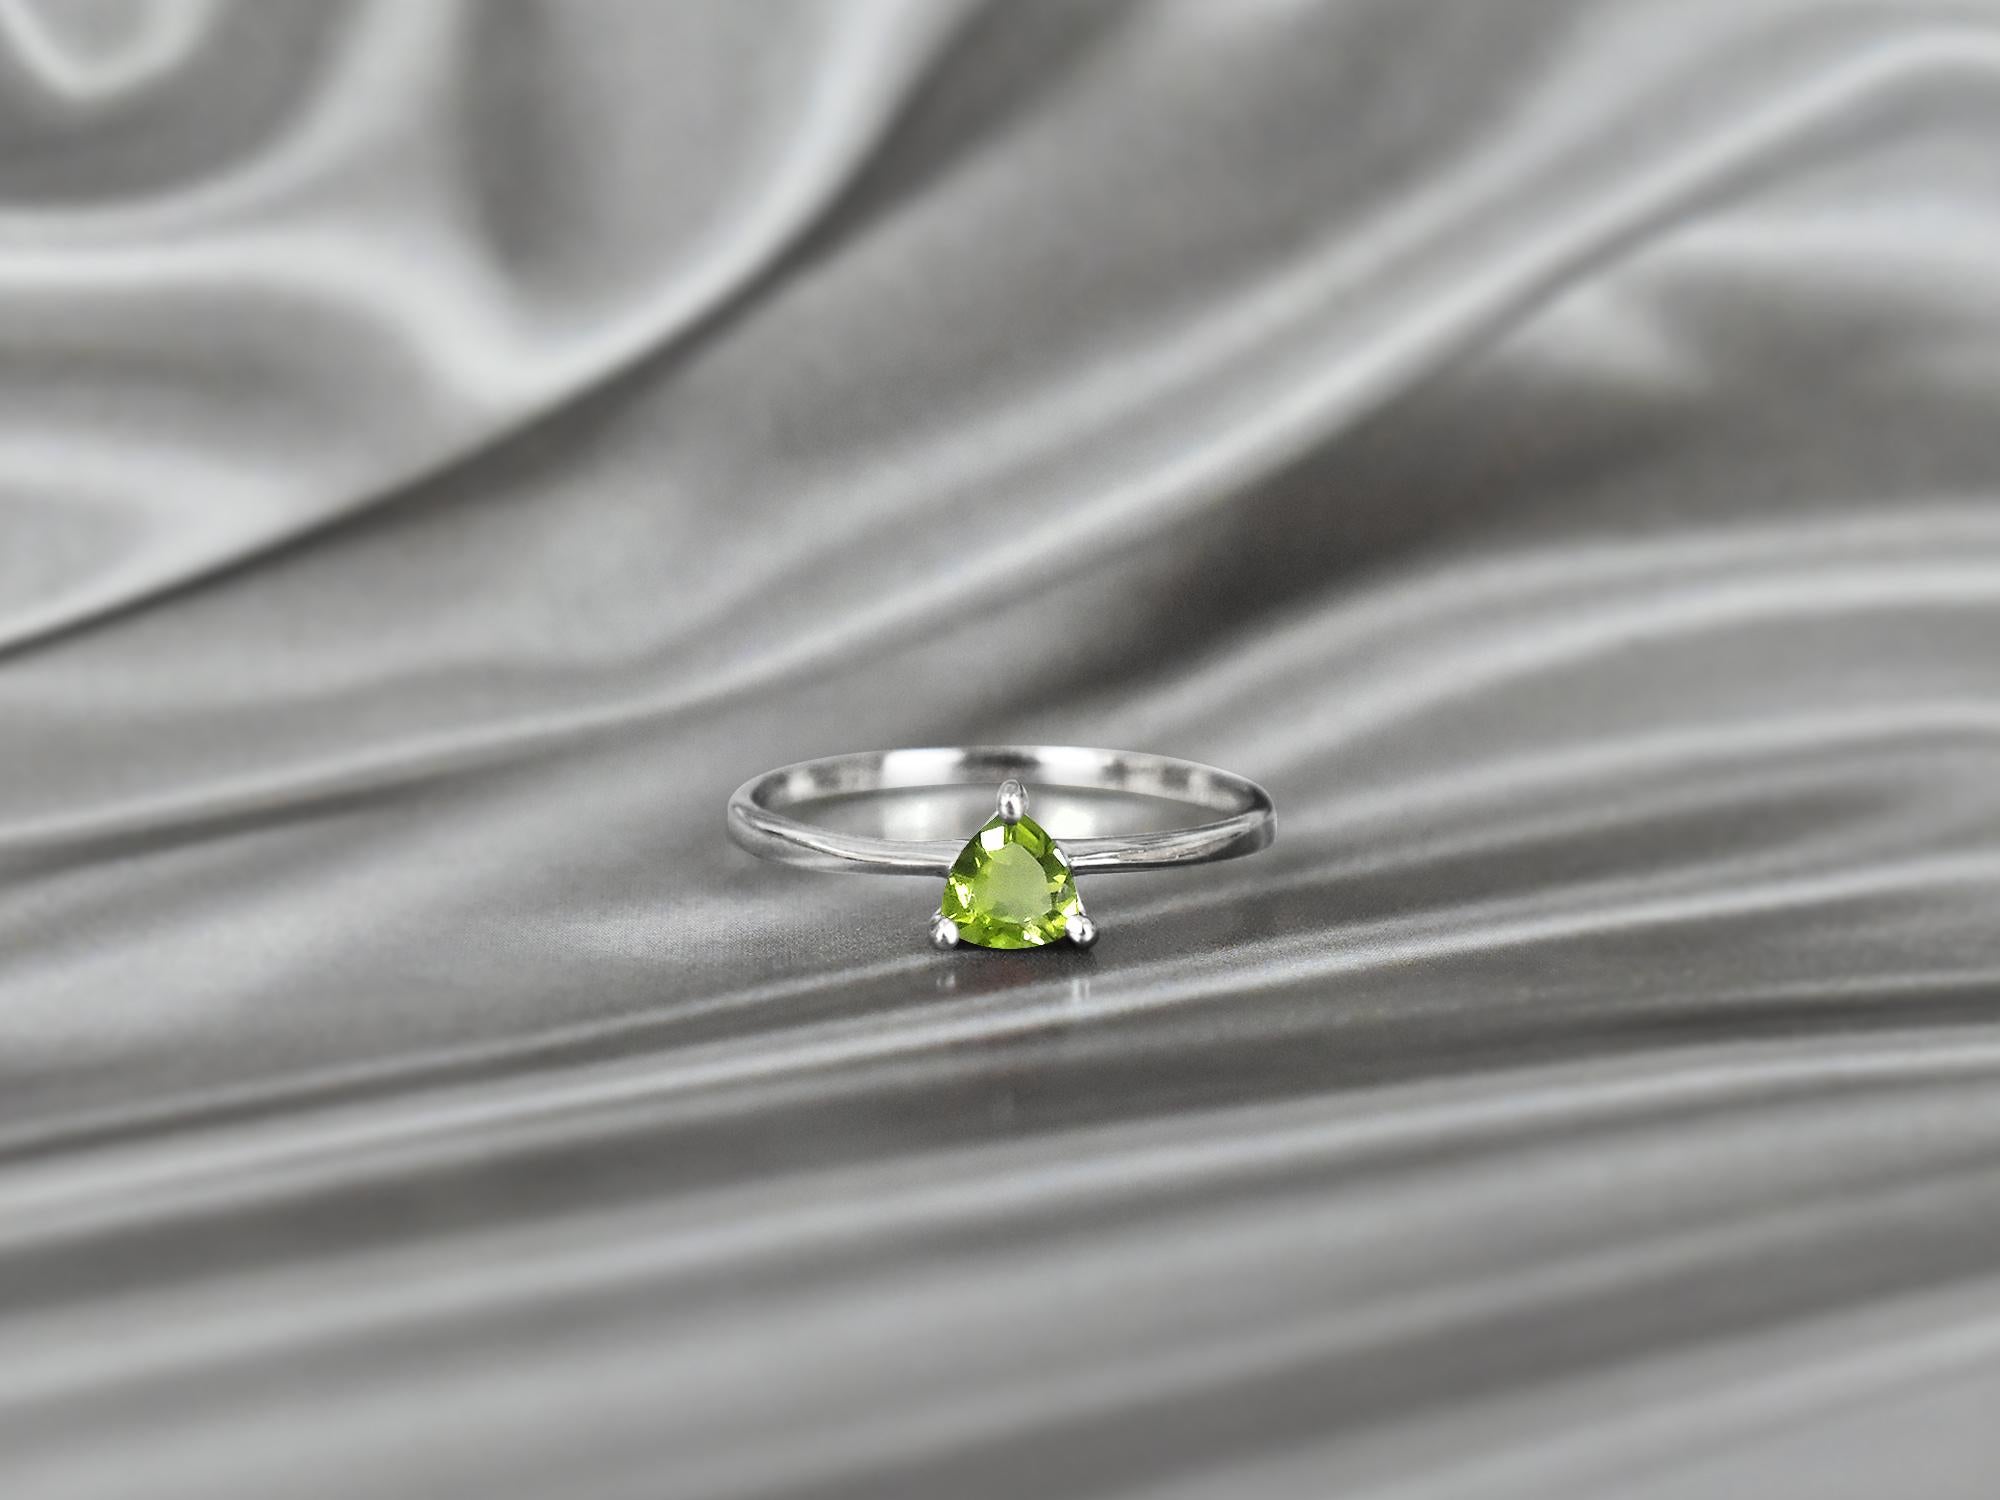 For Sale:  14k Gold Trillion Gemstone 6 mm Trillion Gemstone Engagement Ring Stackable Ring 9